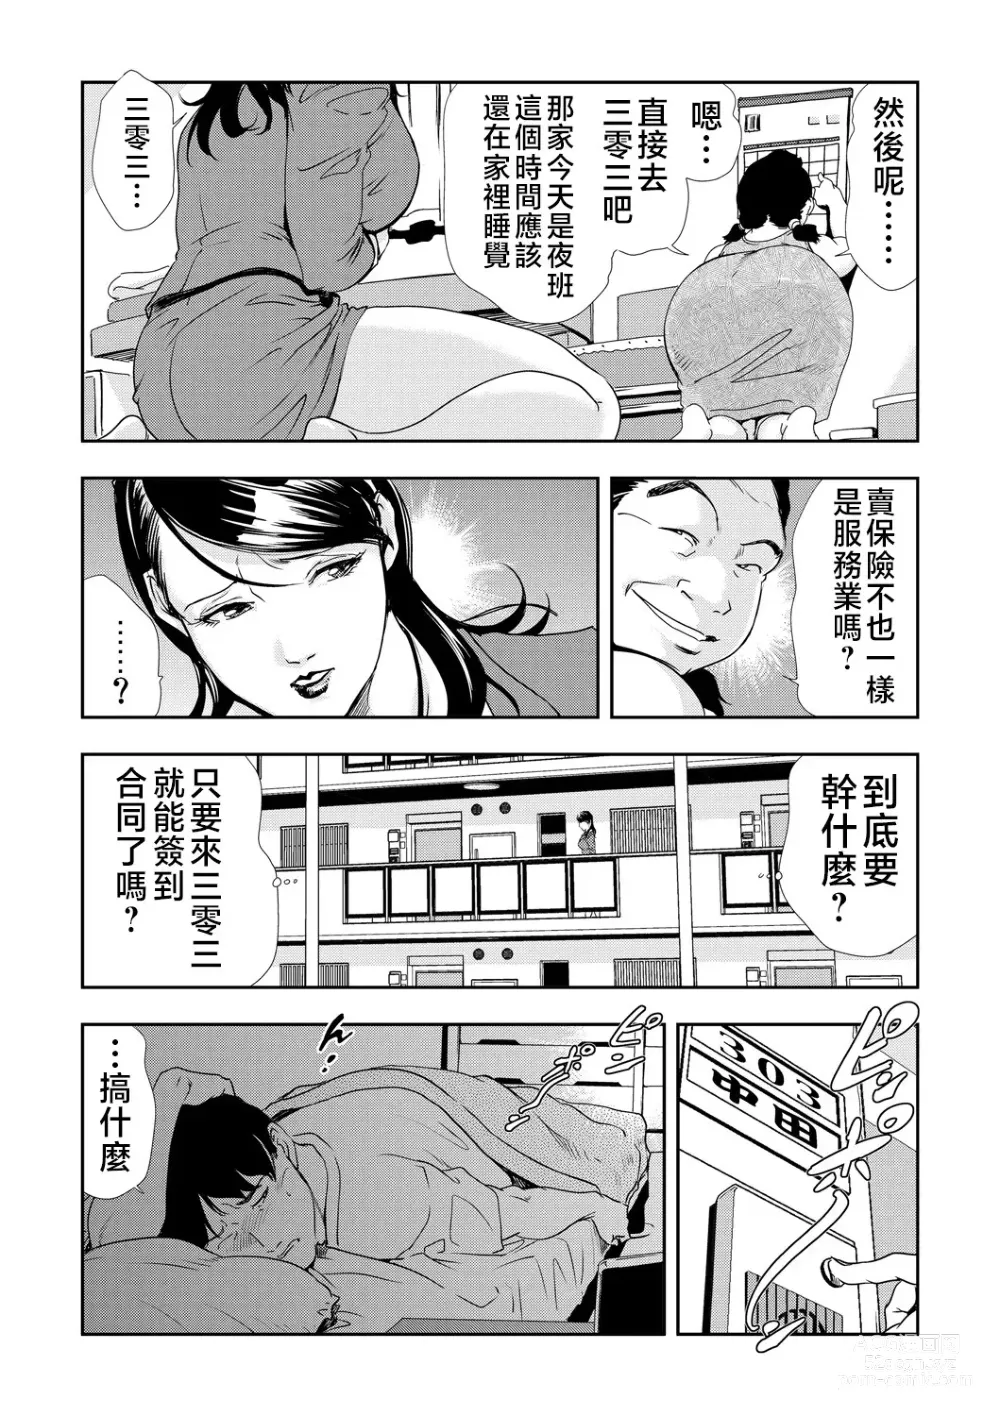 Page 7 of manga Netorare Vol.07